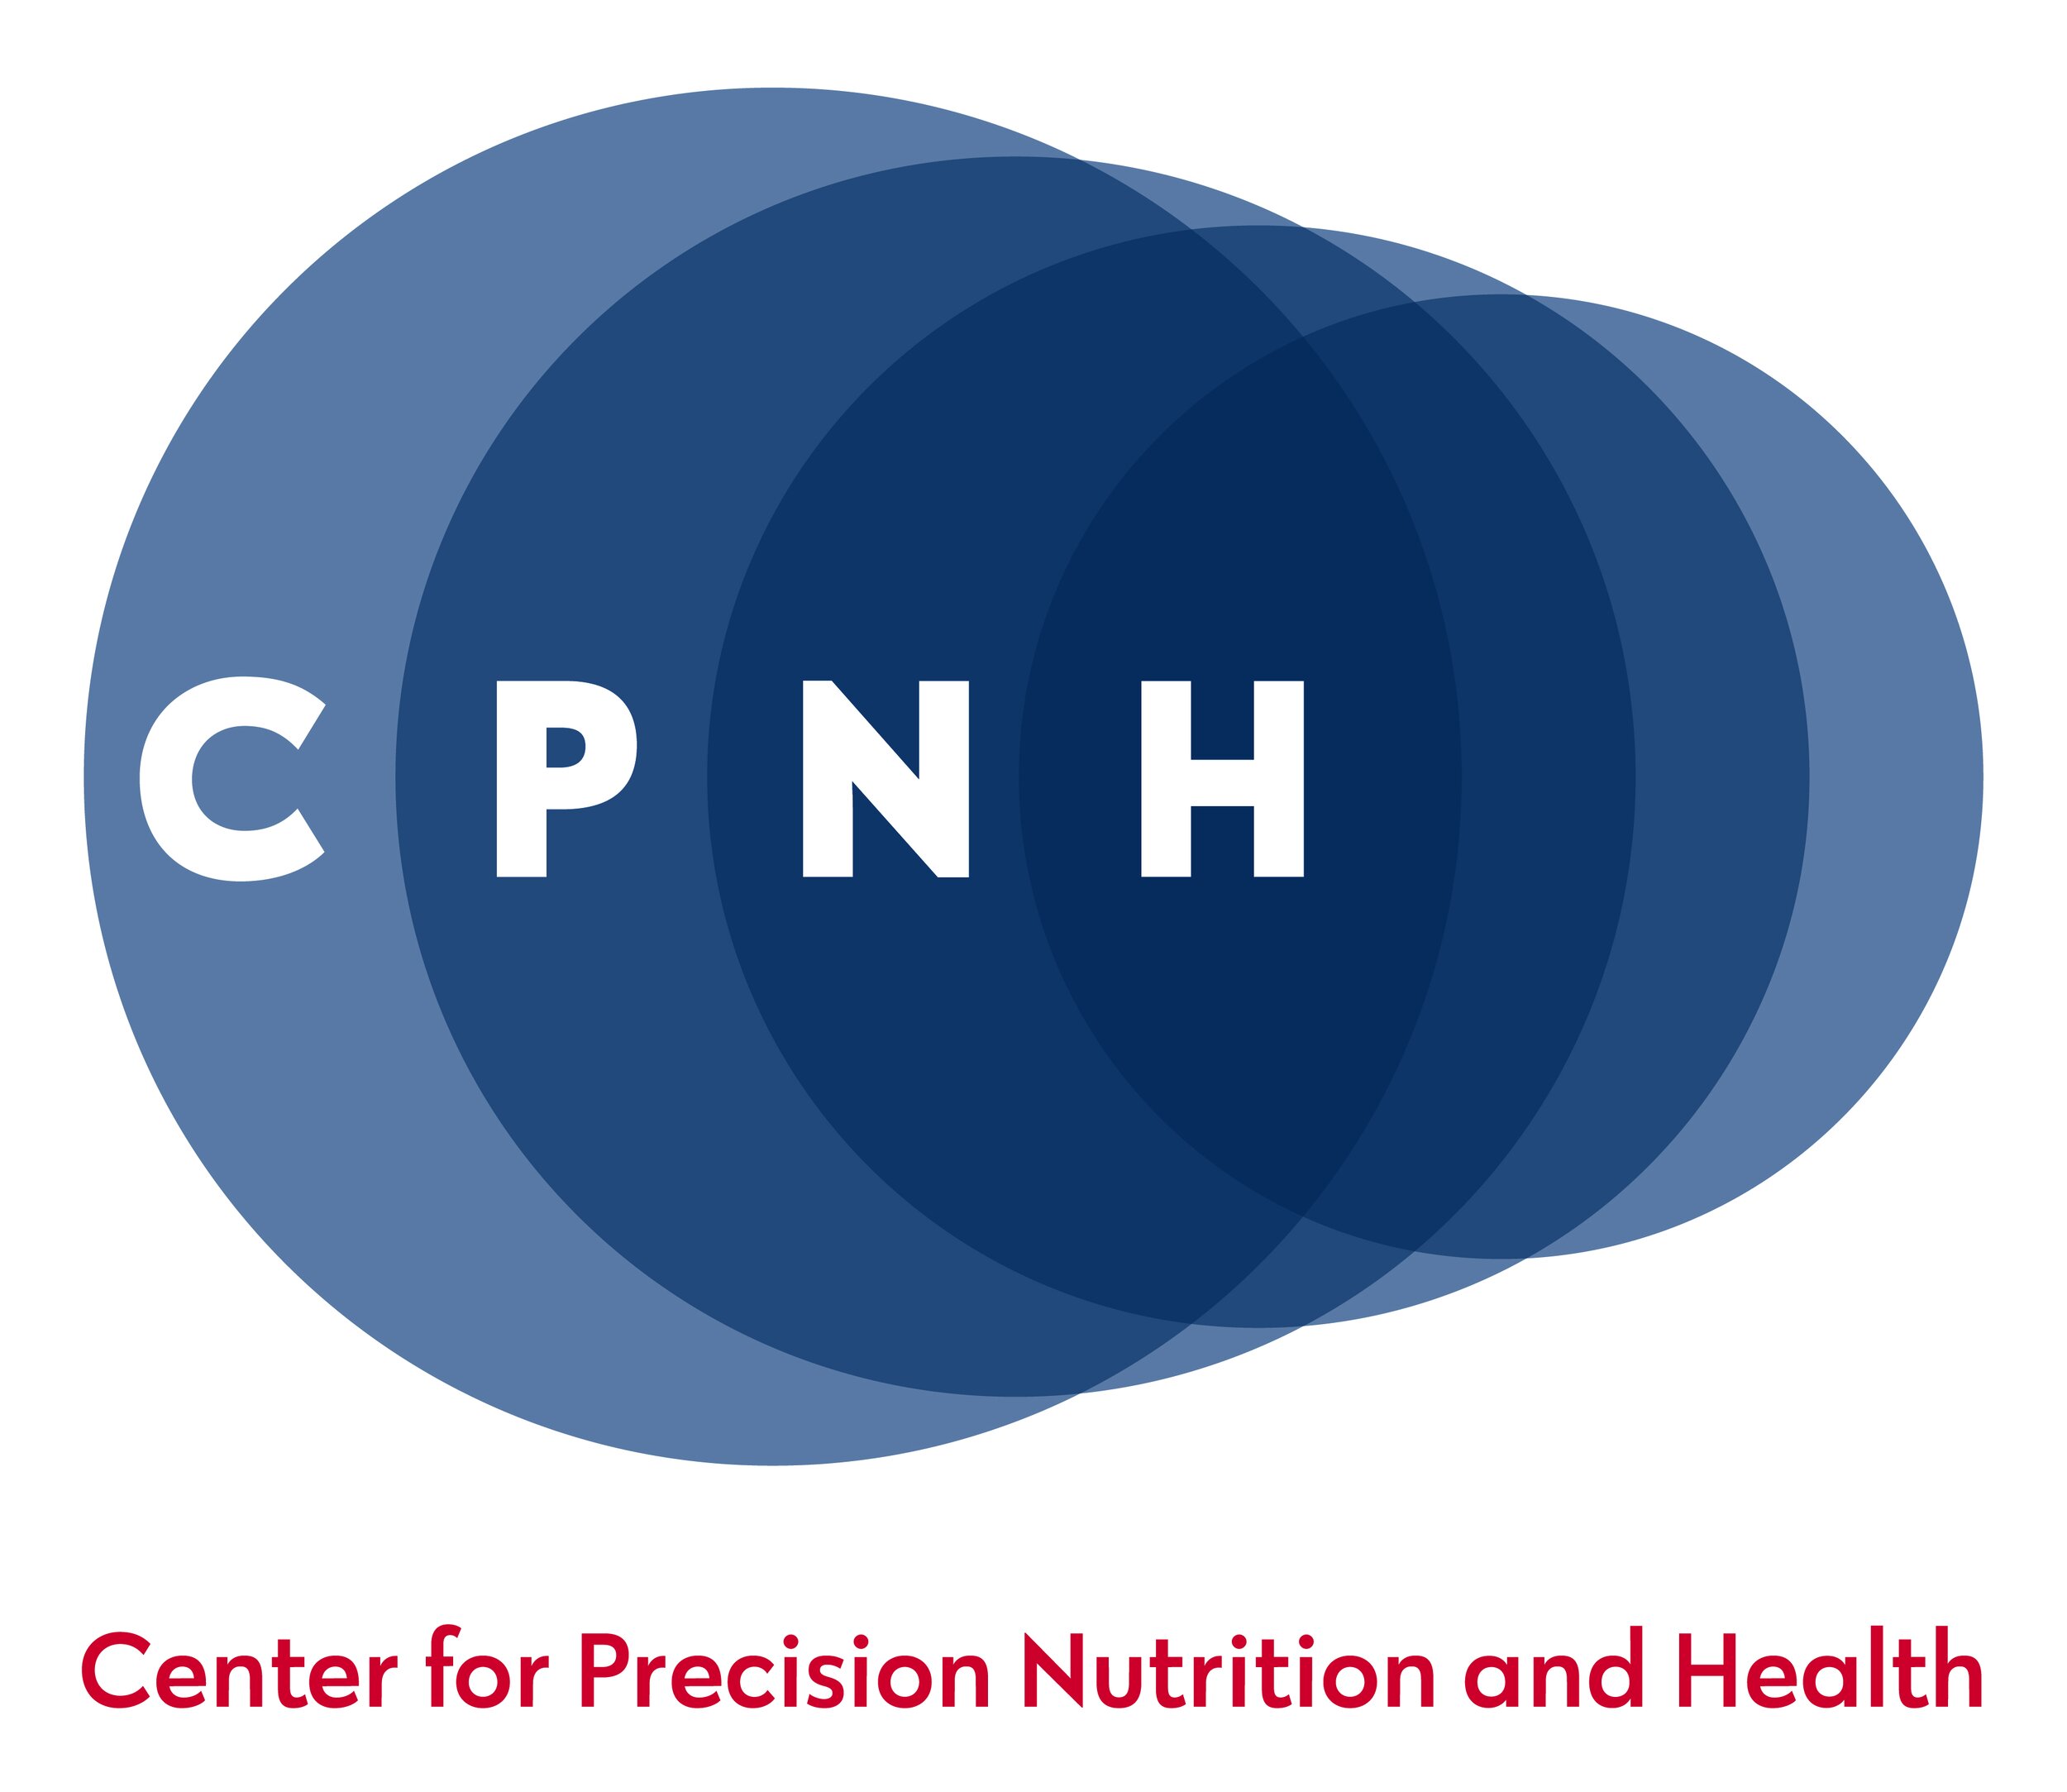 Cornell to co-lead NIH center for precision nutrition research 